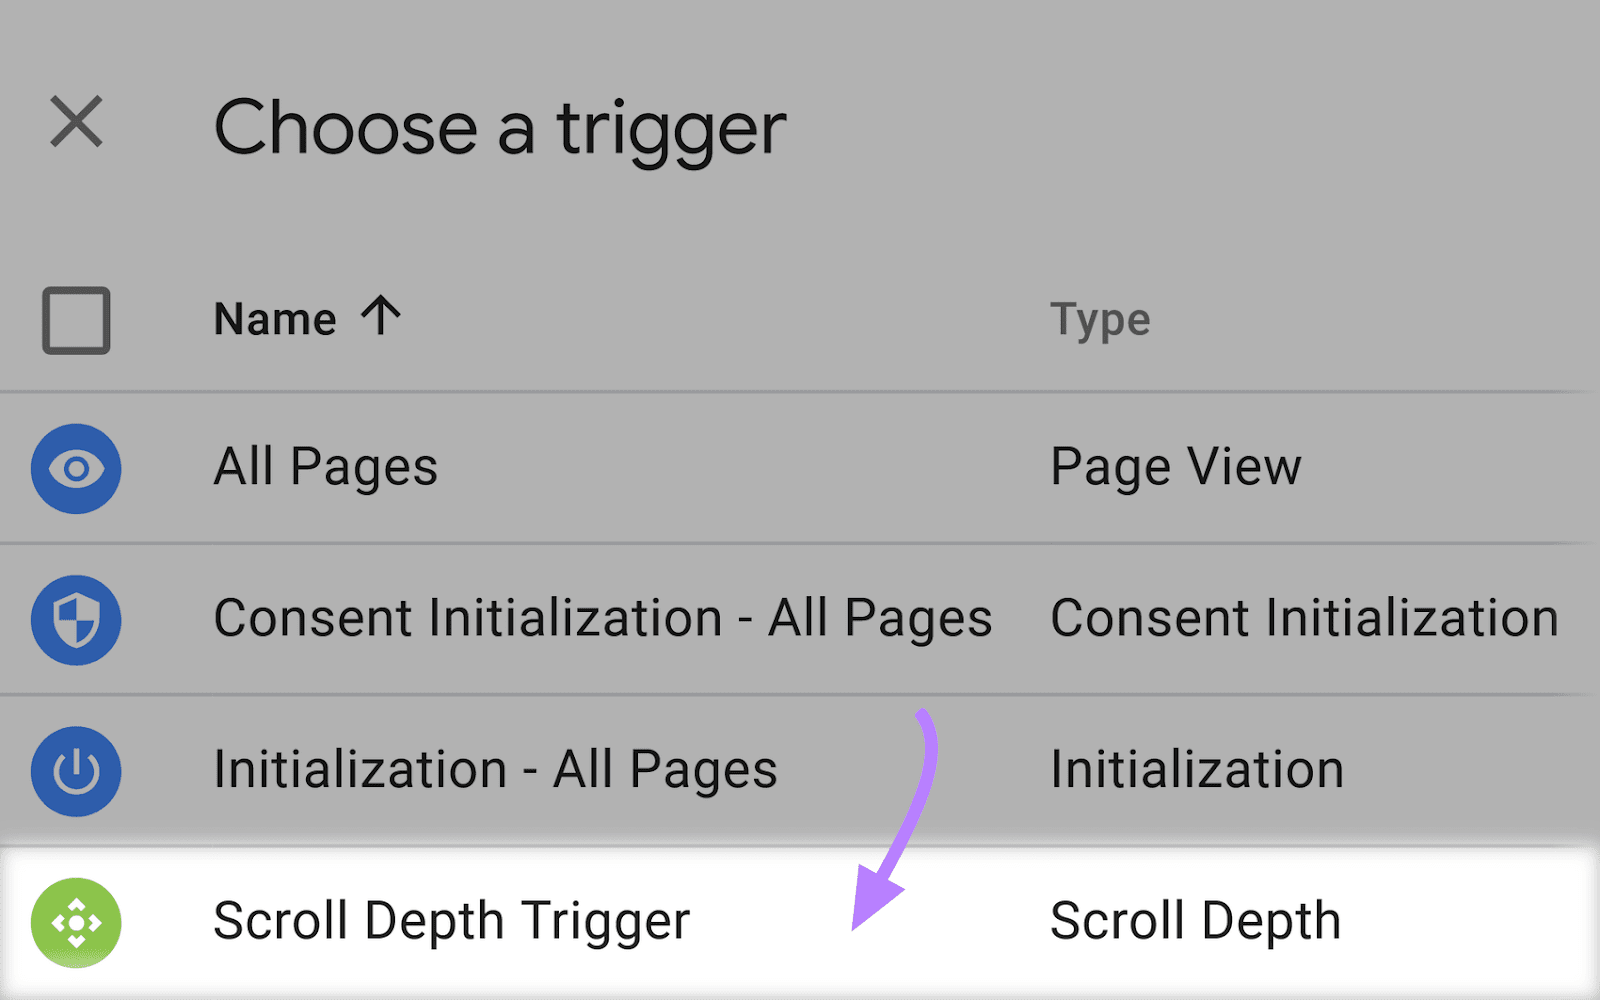 "Scroll Depth Trigger" selected under "Choose a trigger" window